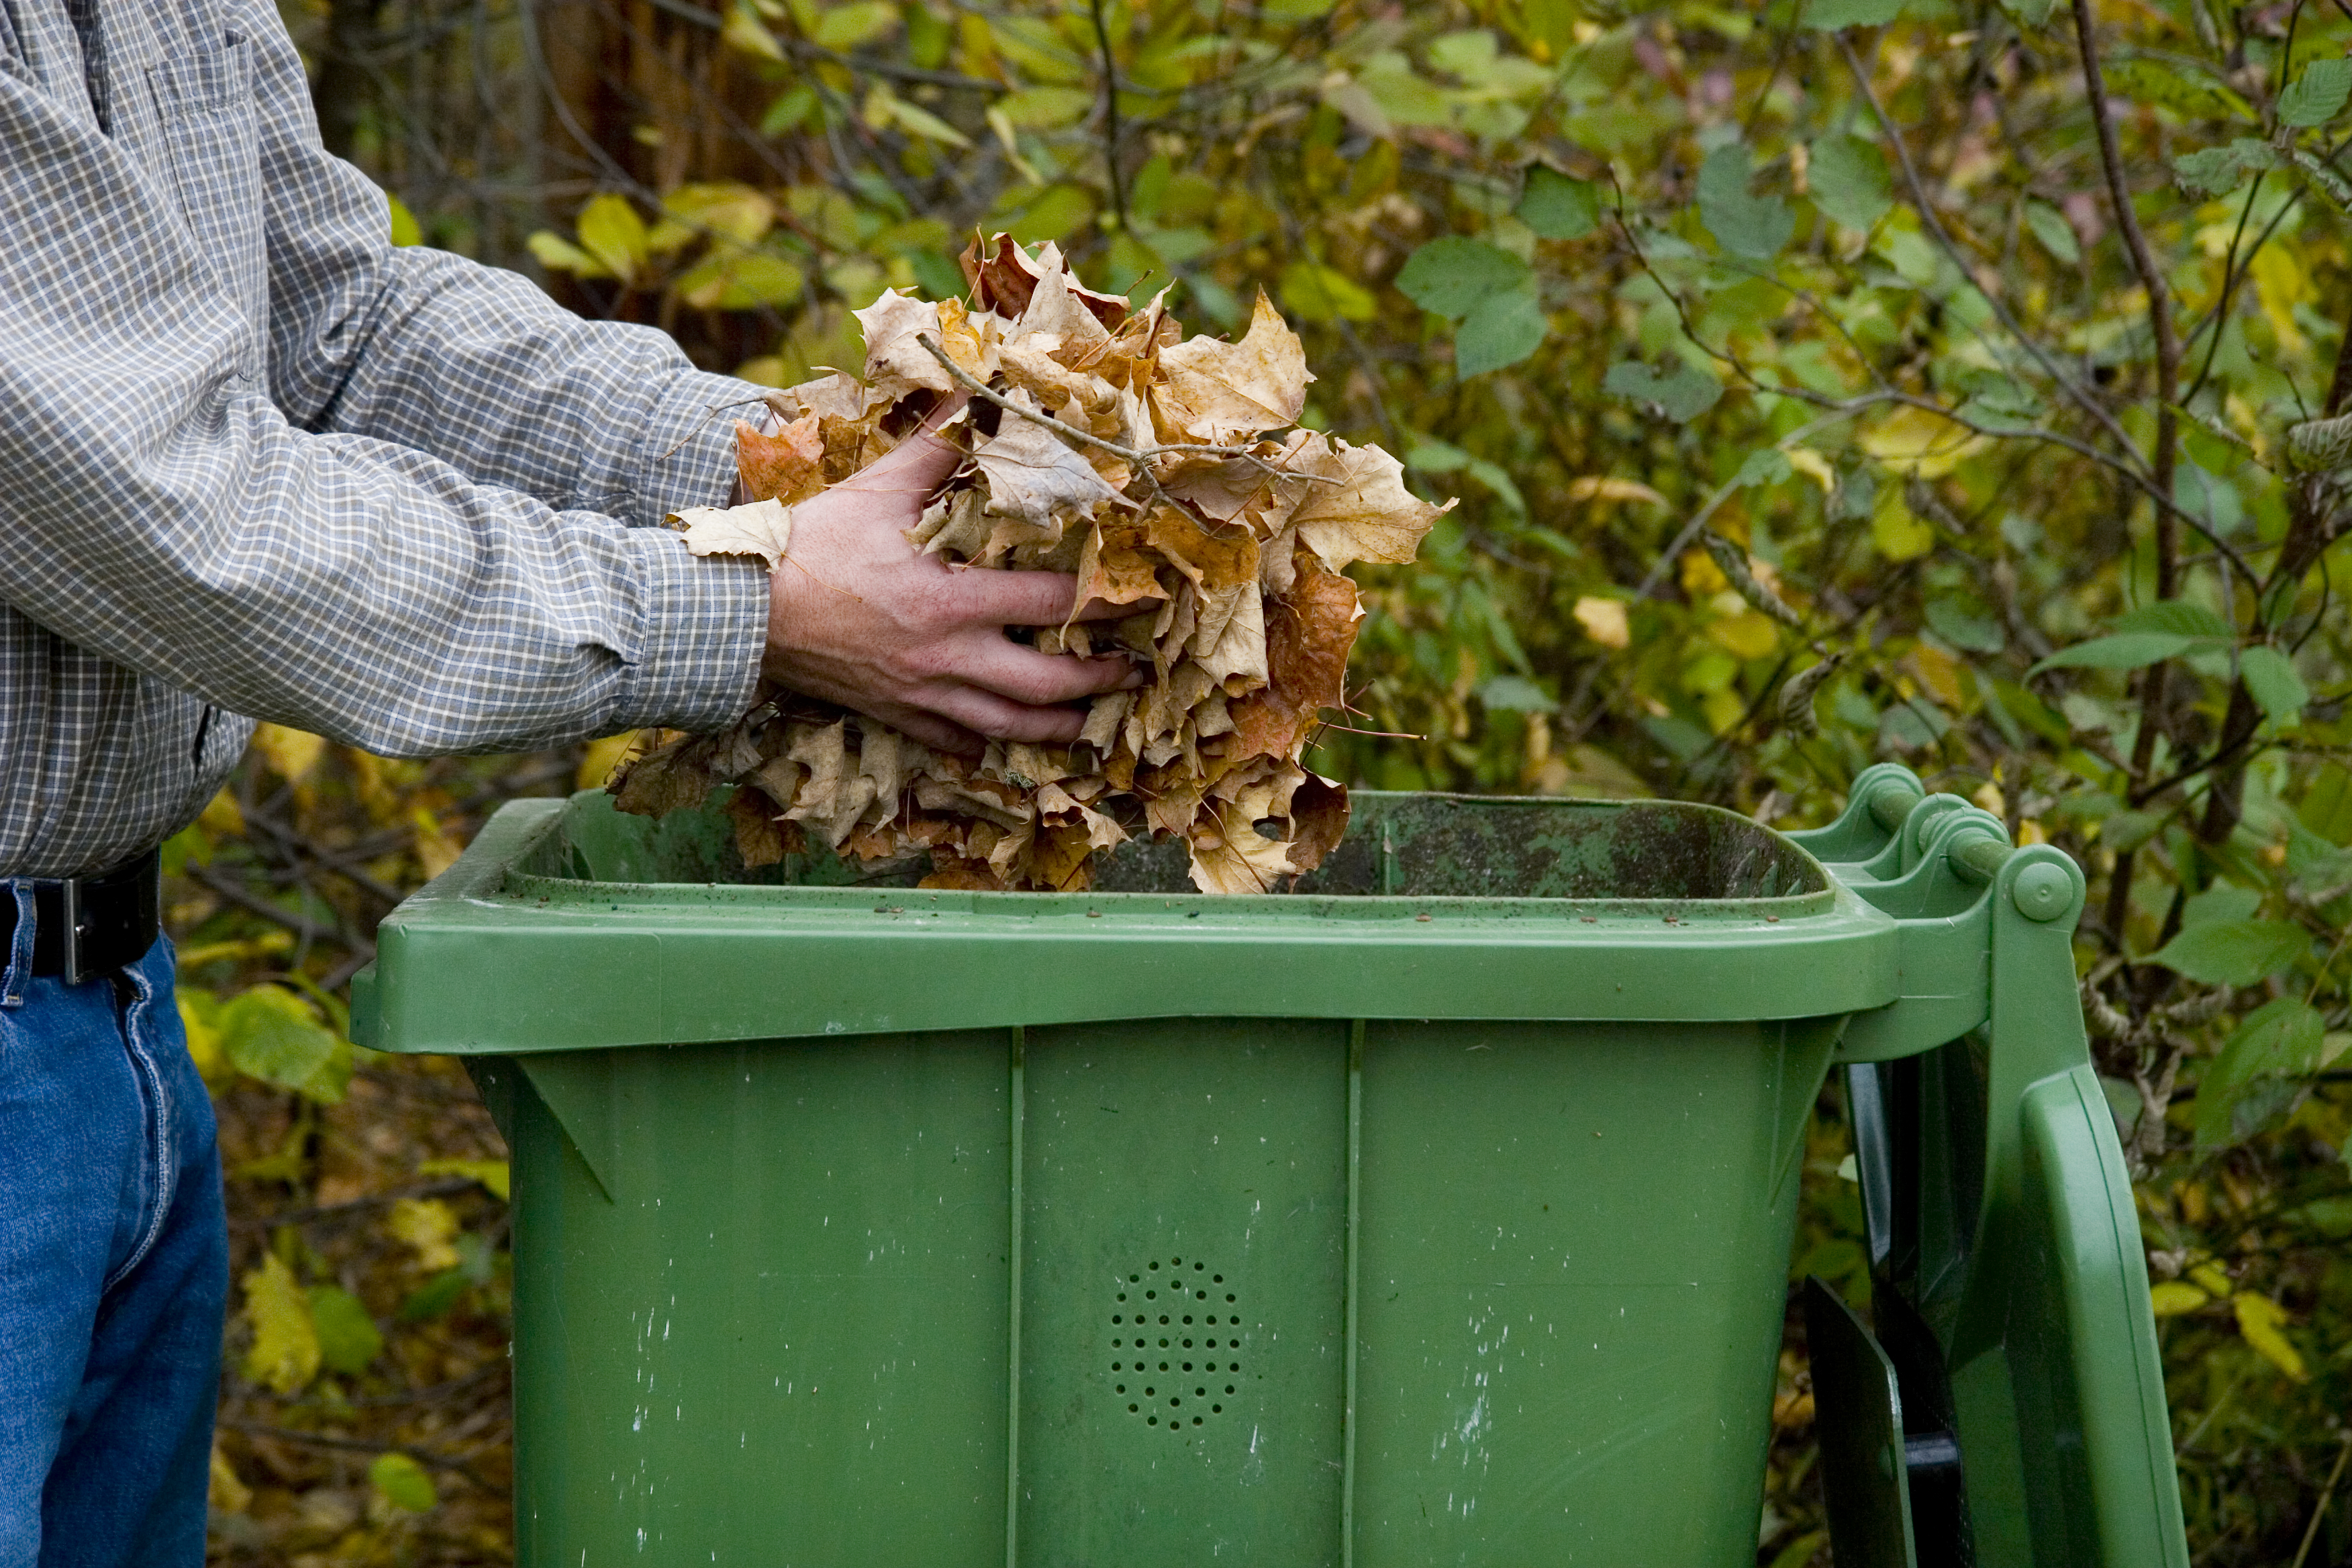 https://bouldercolorado.gov/sites/default/files/2021-10/fall-leaves-composting.jpg